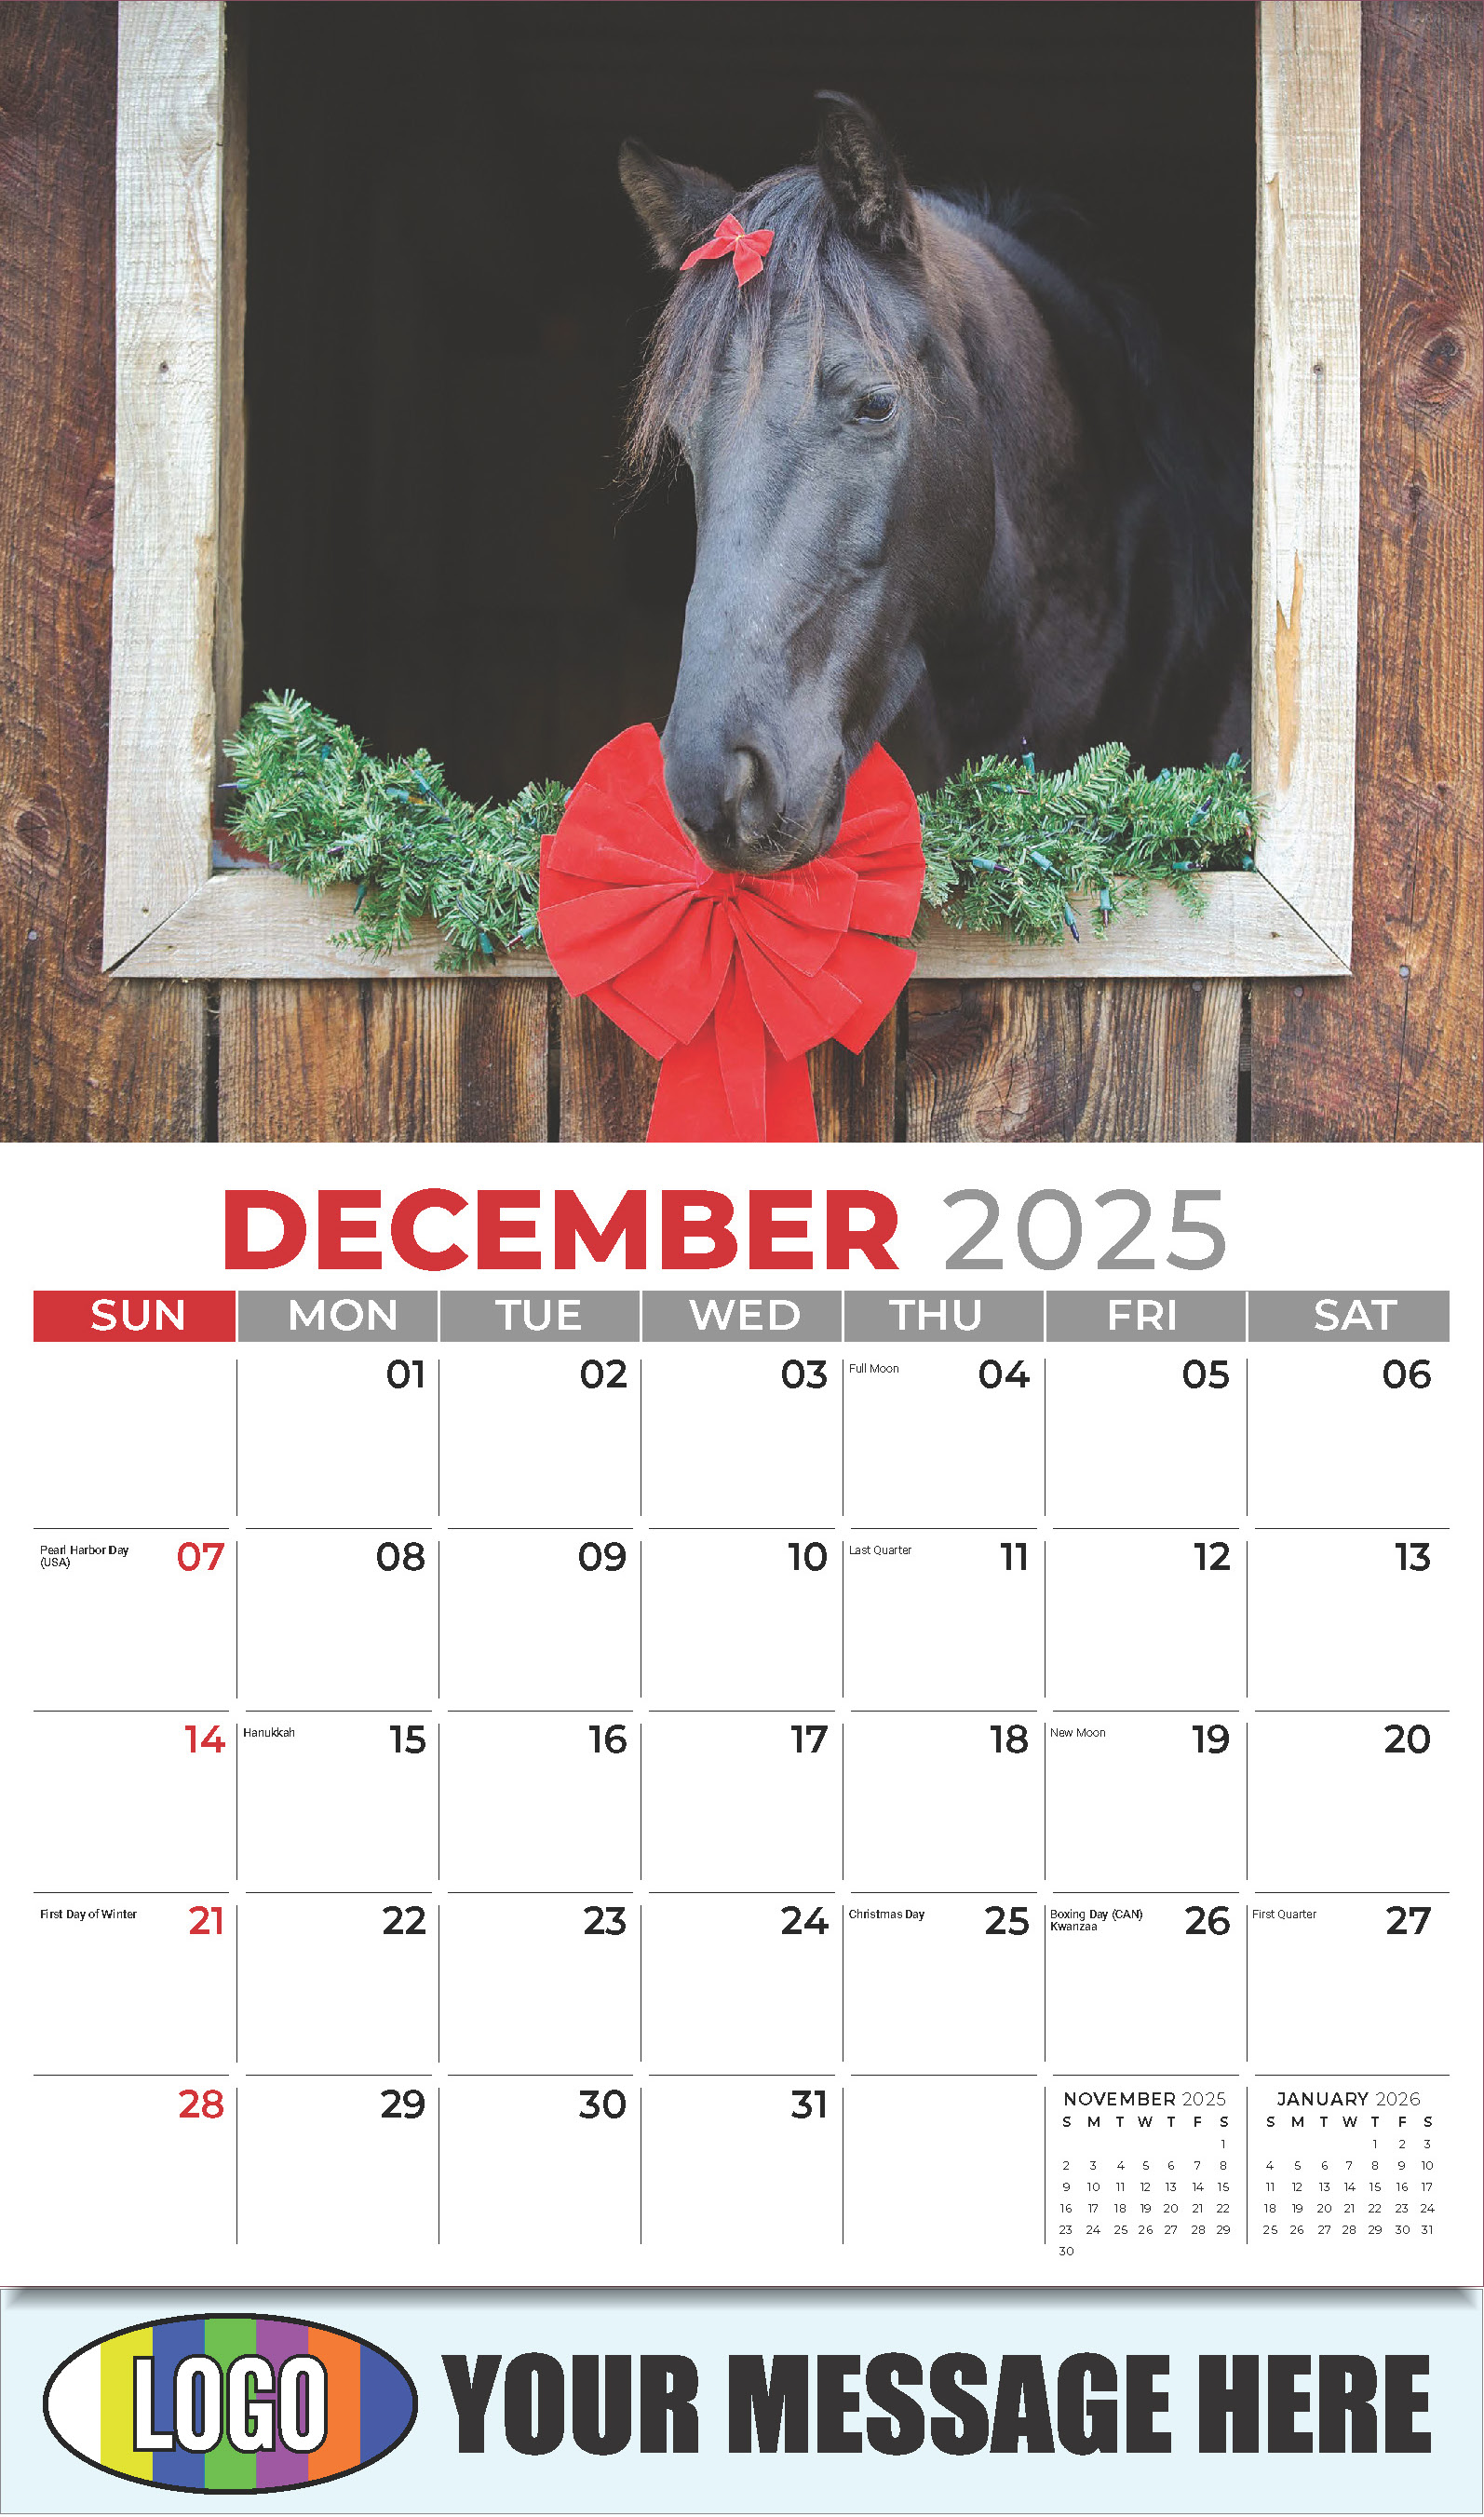 Country Spirit 2025 Business Advertising Calendar - December